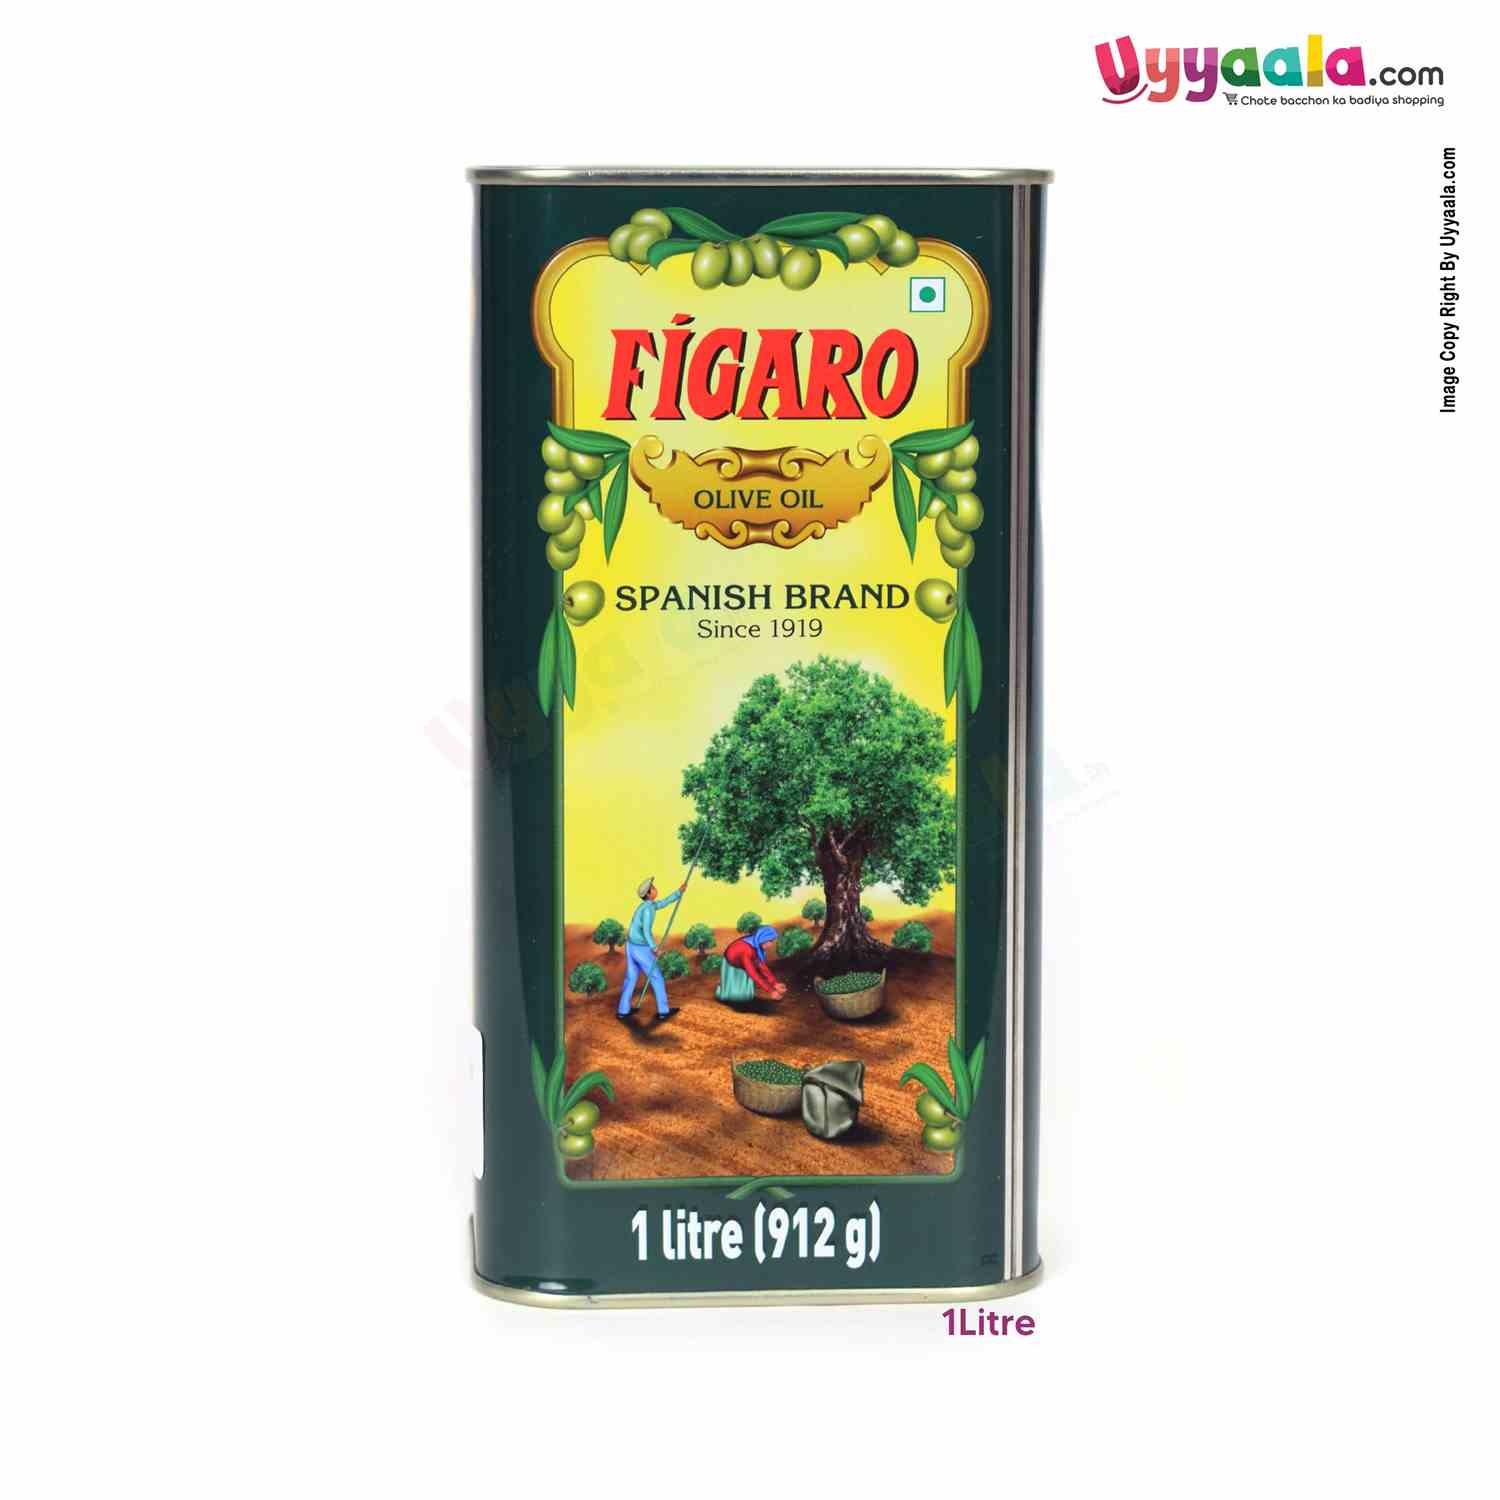 FIGARO Olive Oil Spanish Brand